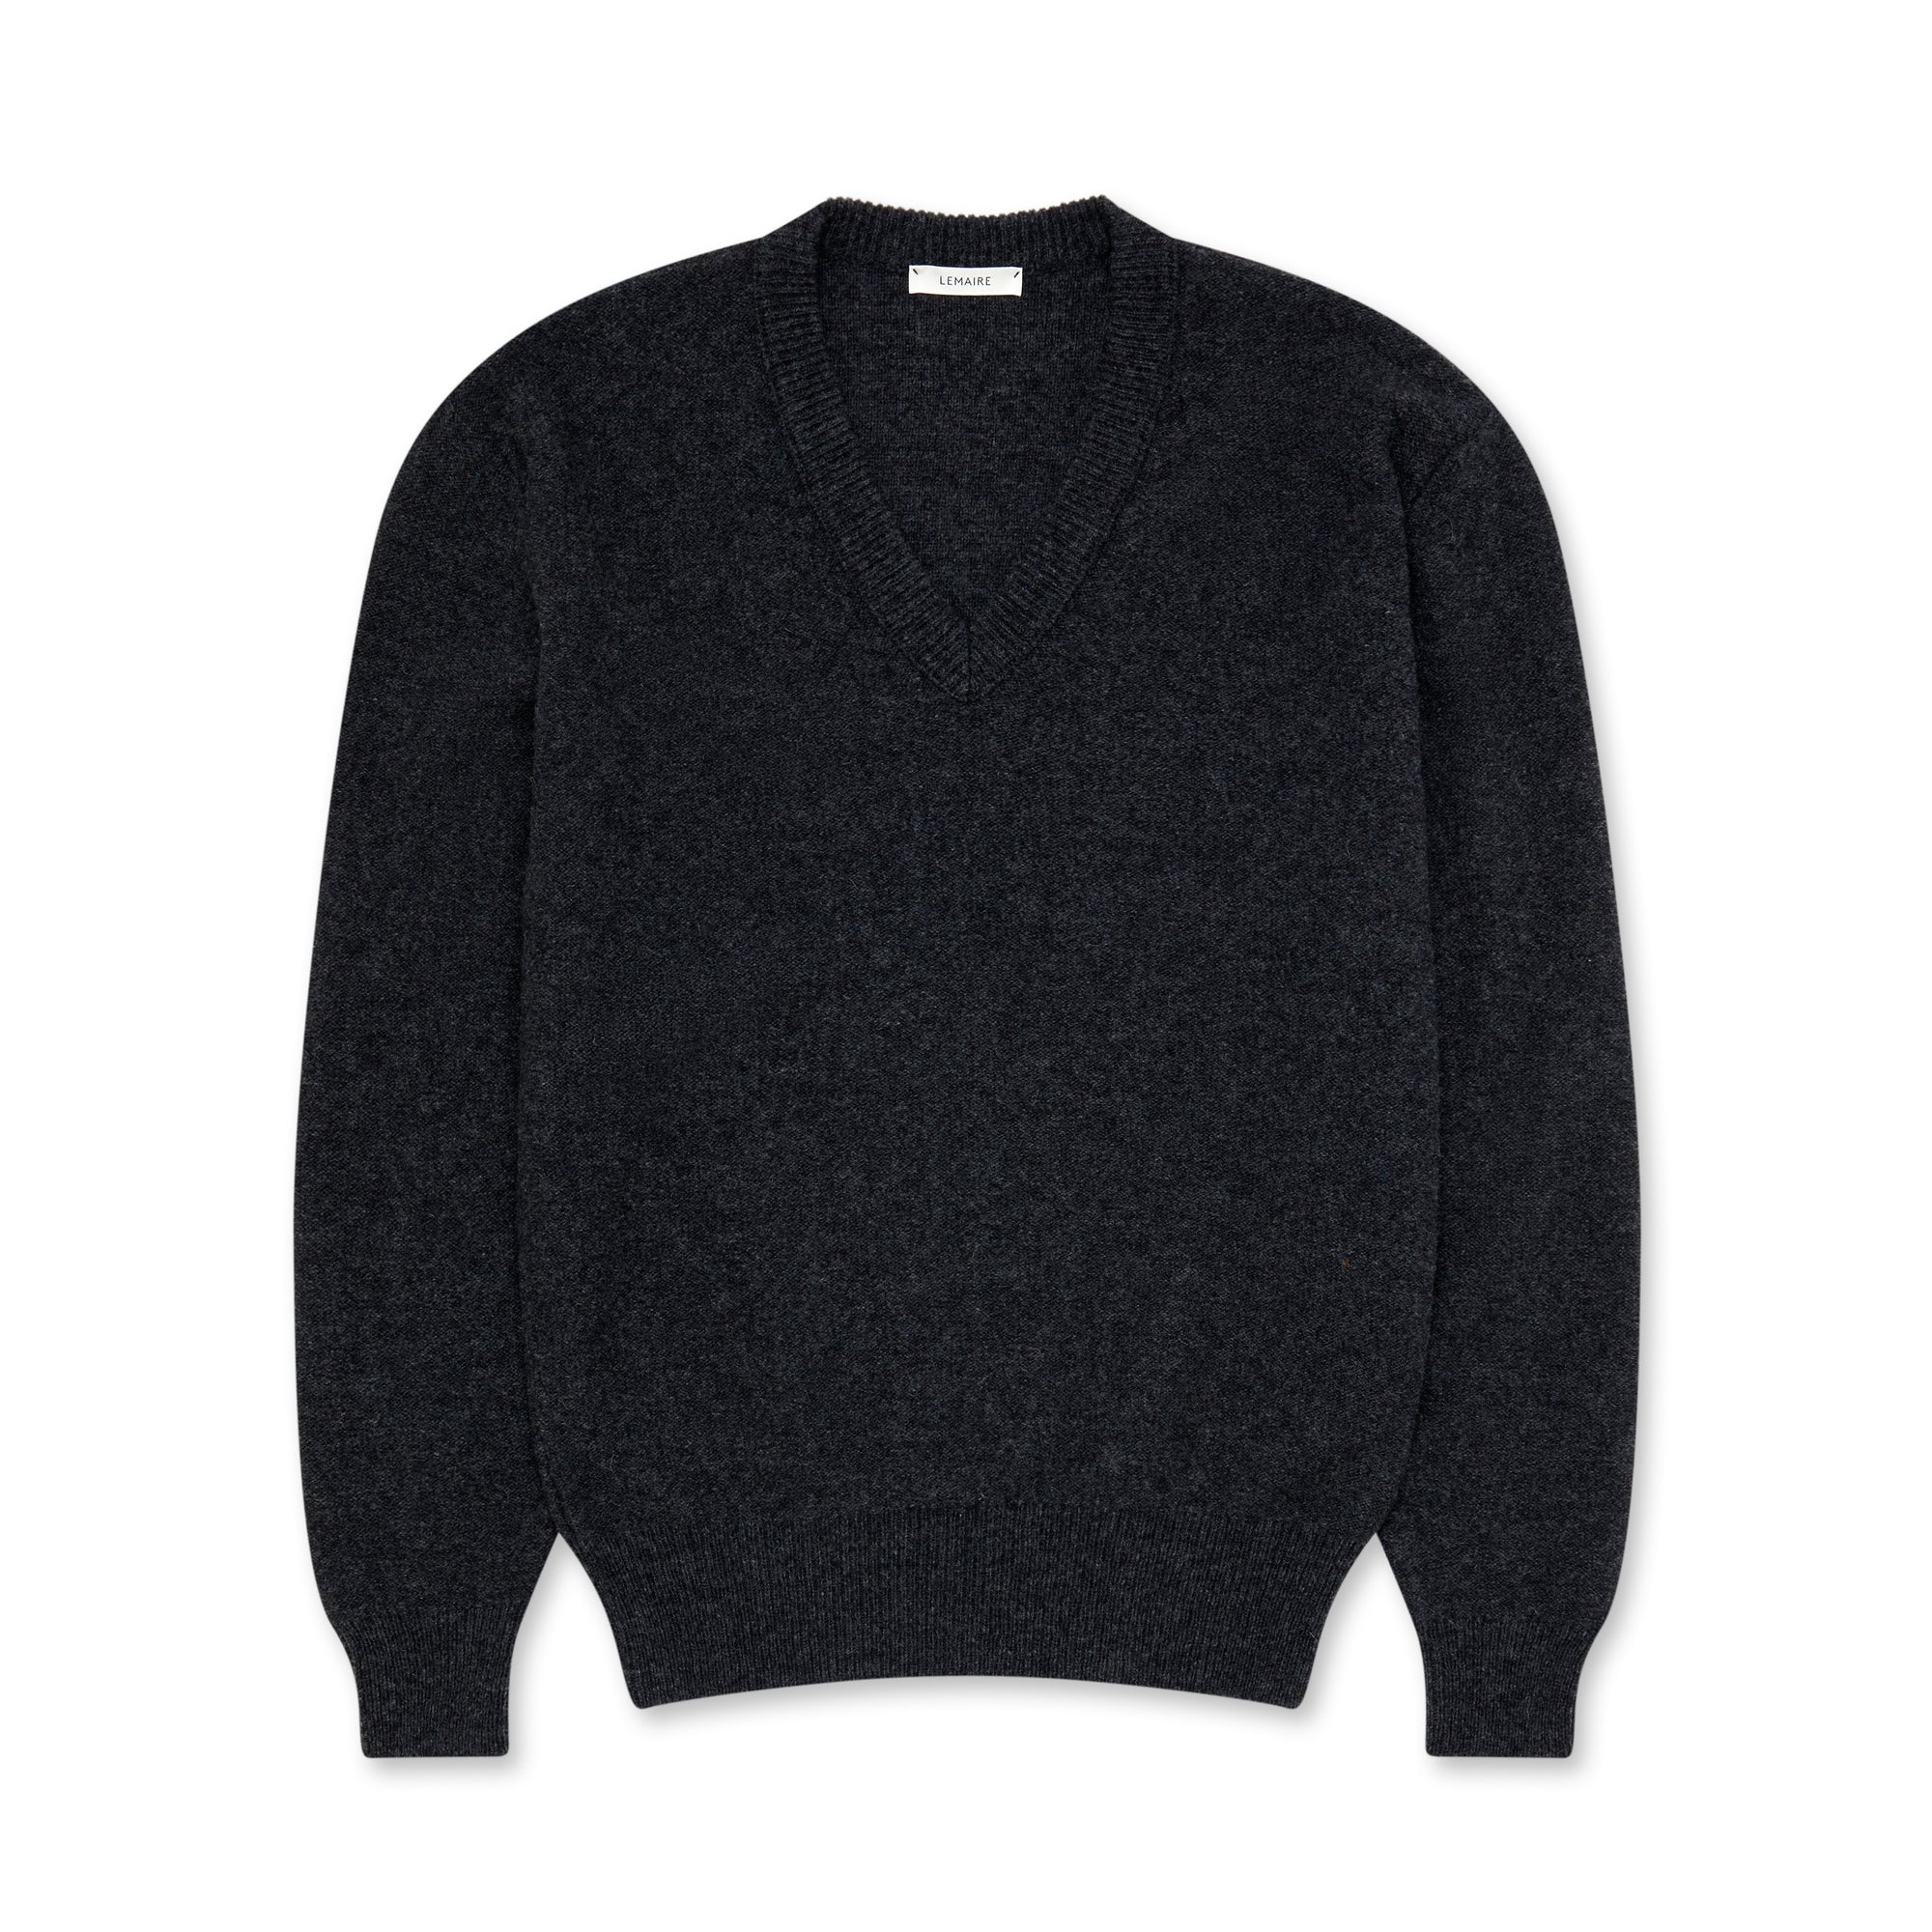 Lemaire - Men’s V-Neck Sweater - (Black) view 5